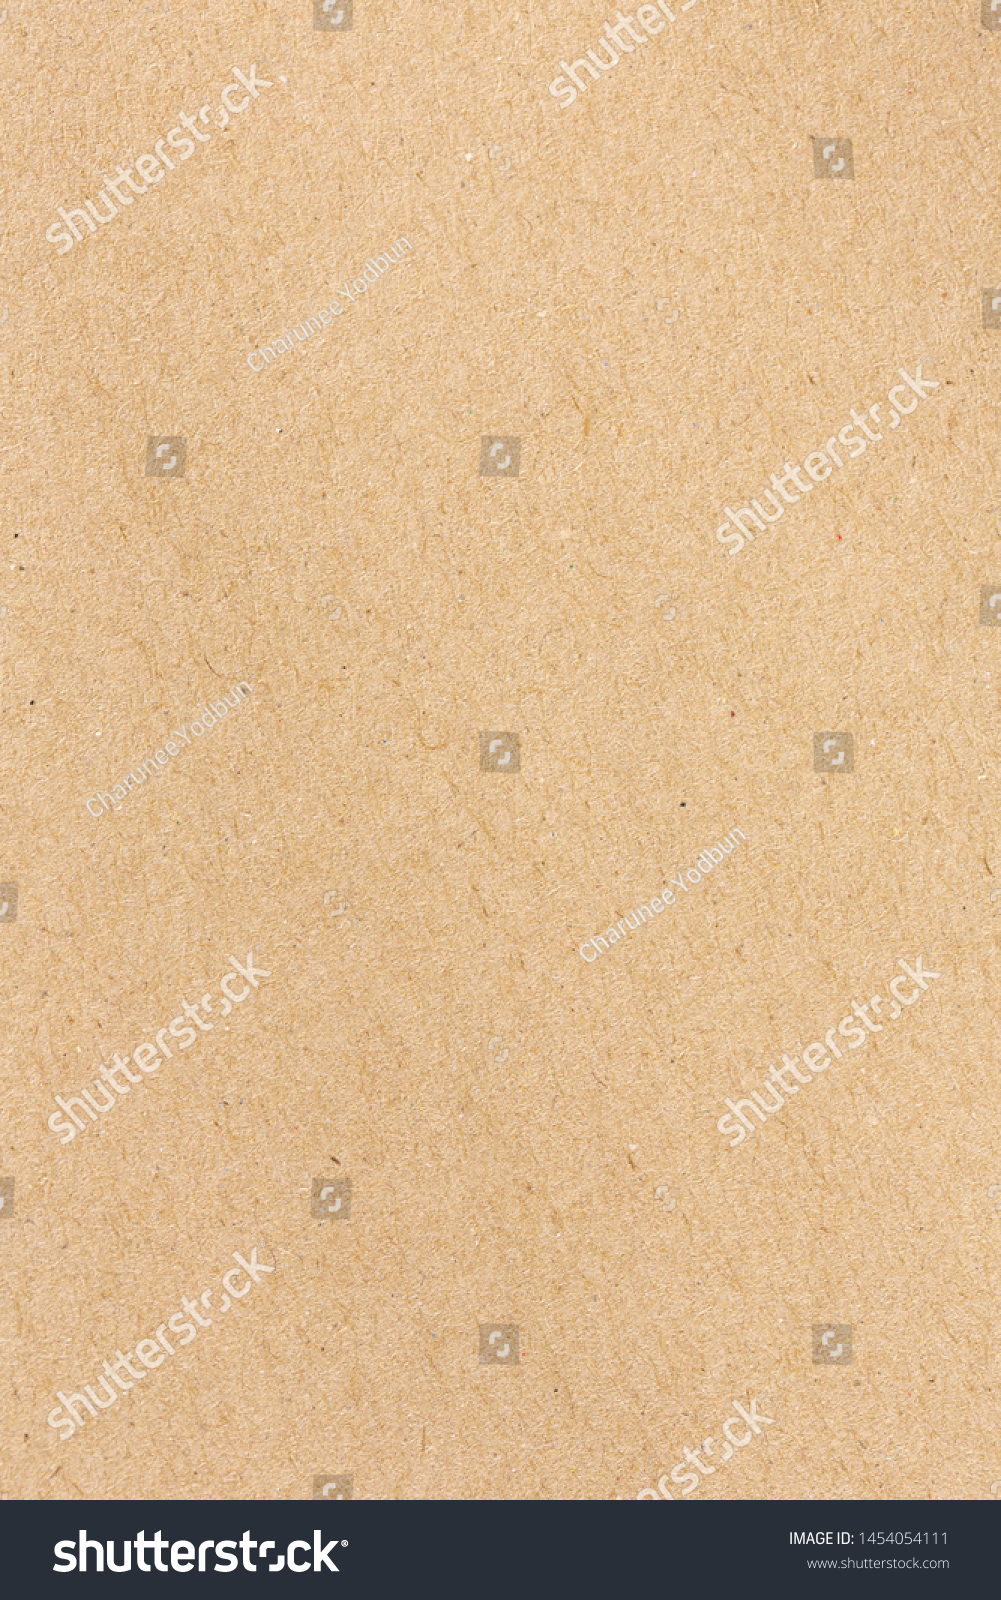 Brown cardboard sheet of paper background #1454054111